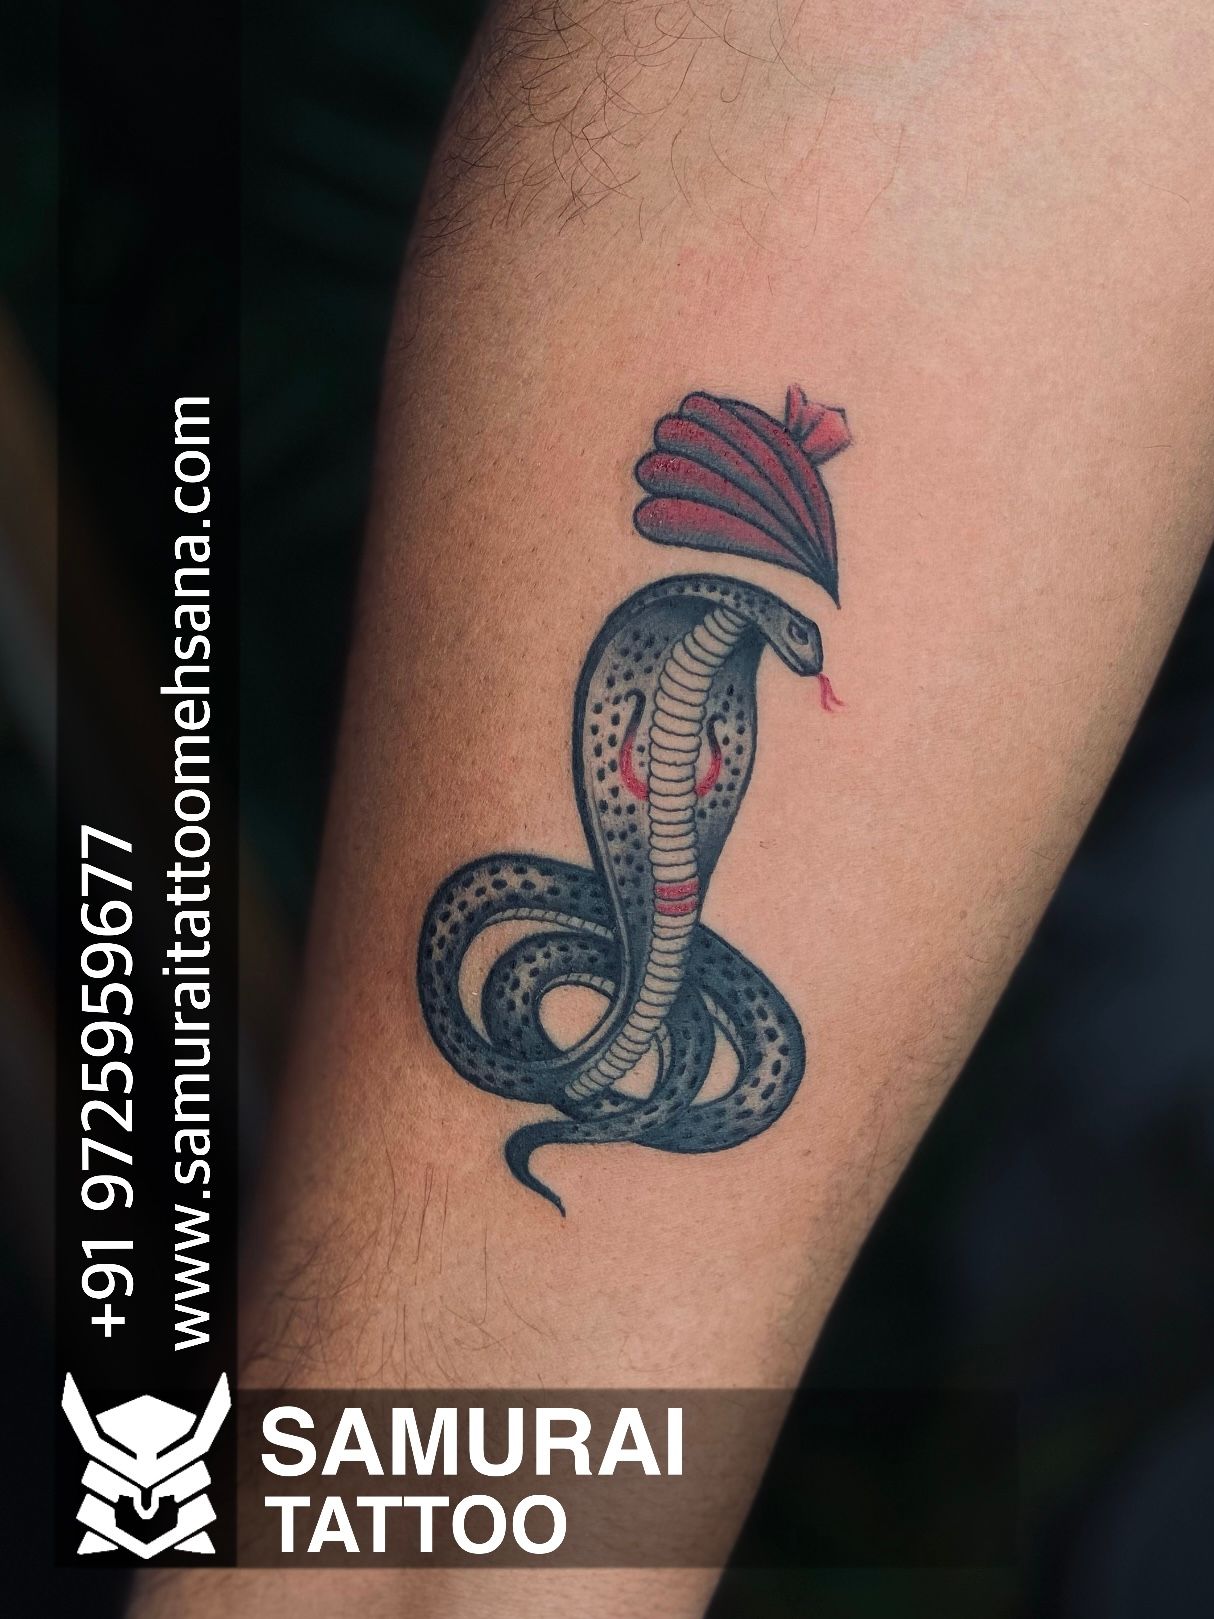 Goga maharaj tattoo |Goga tattoo |Jay goga tattoo |Jay goga maharaj tattoo  | Friendship tattoos, Snake tattoo design, Cute tattoos for women